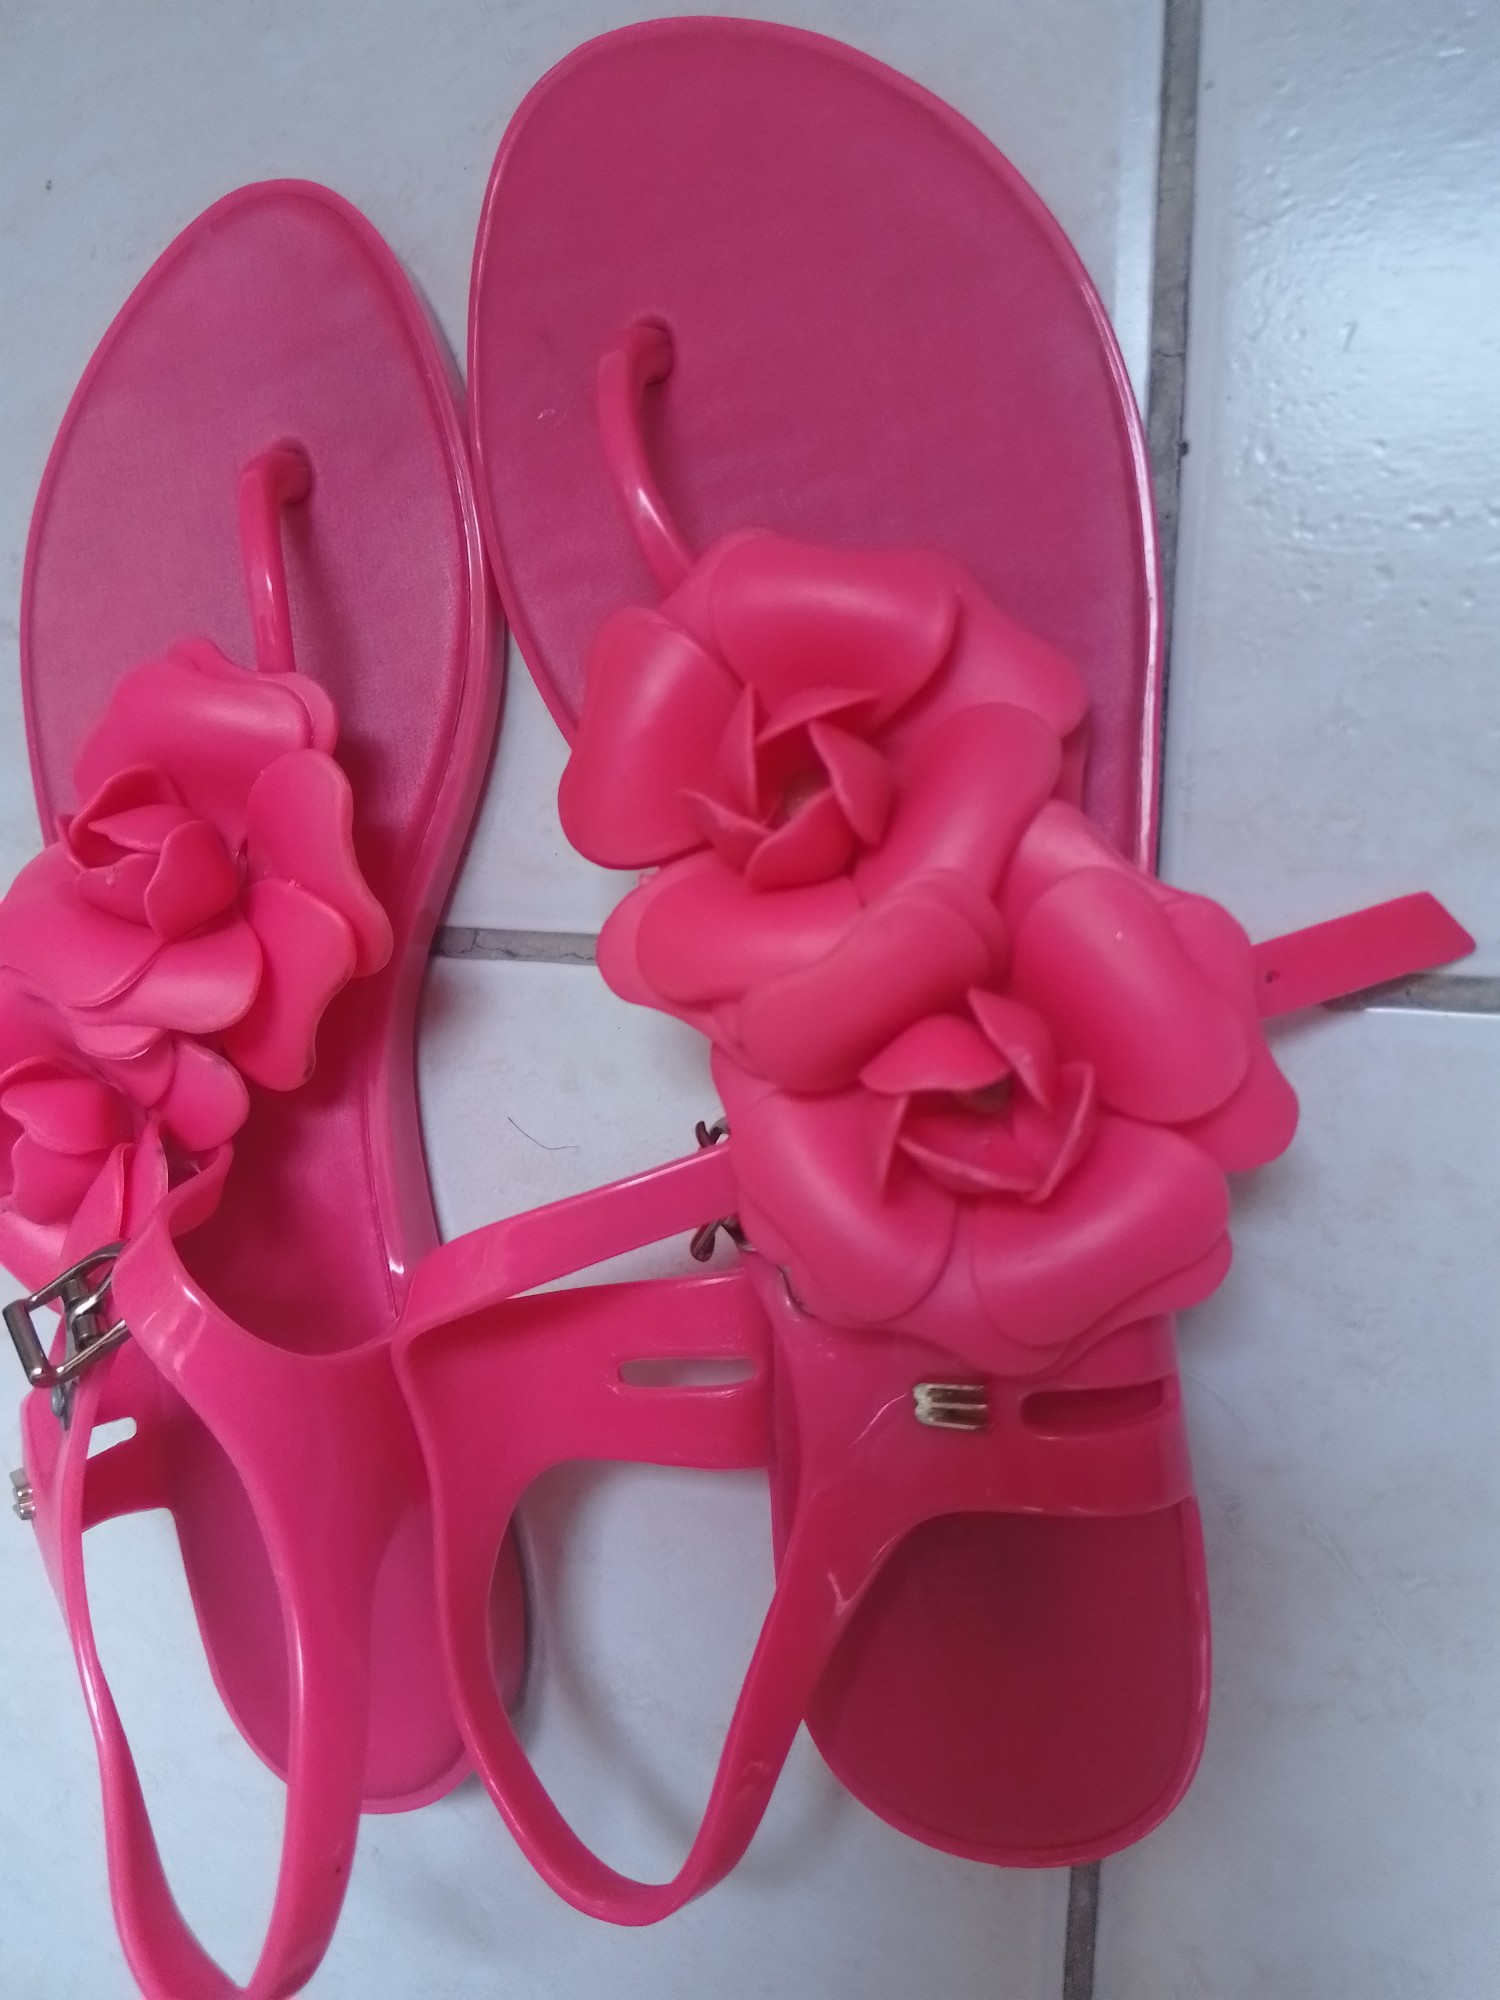 zapatos para mujer - Zapatillas con flores MELISSA size 8 sapatillas color rosa no son marca falsa 2